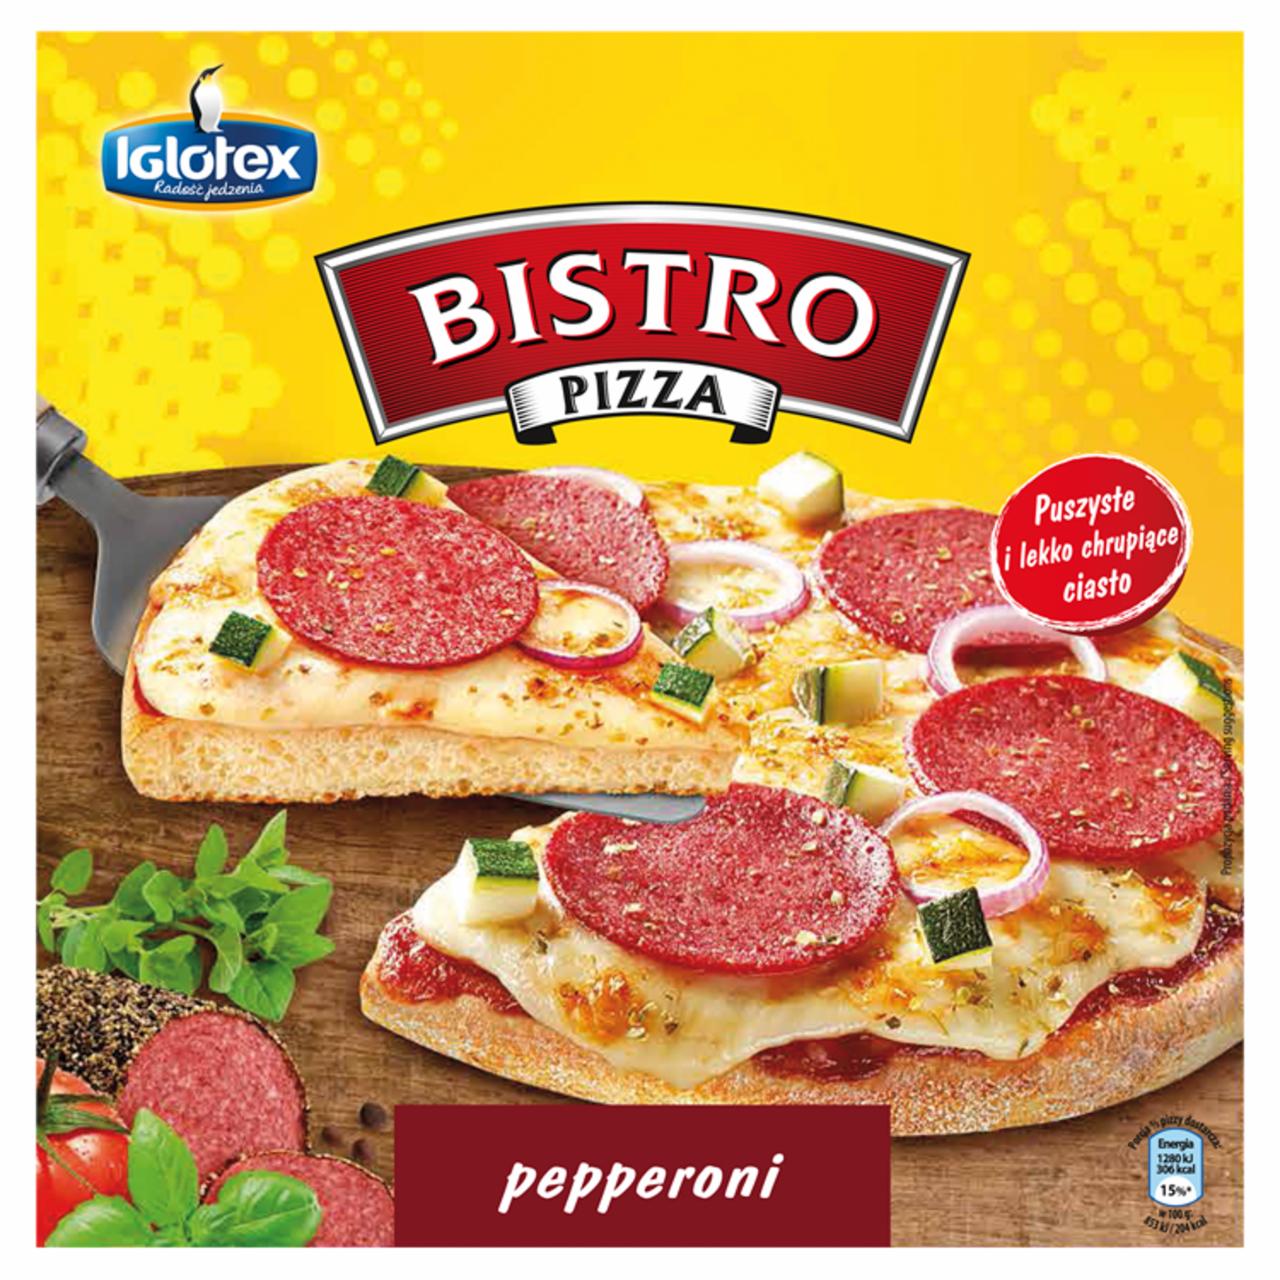 Zdjęcia - Bistro Pizza pepperoni 300 g